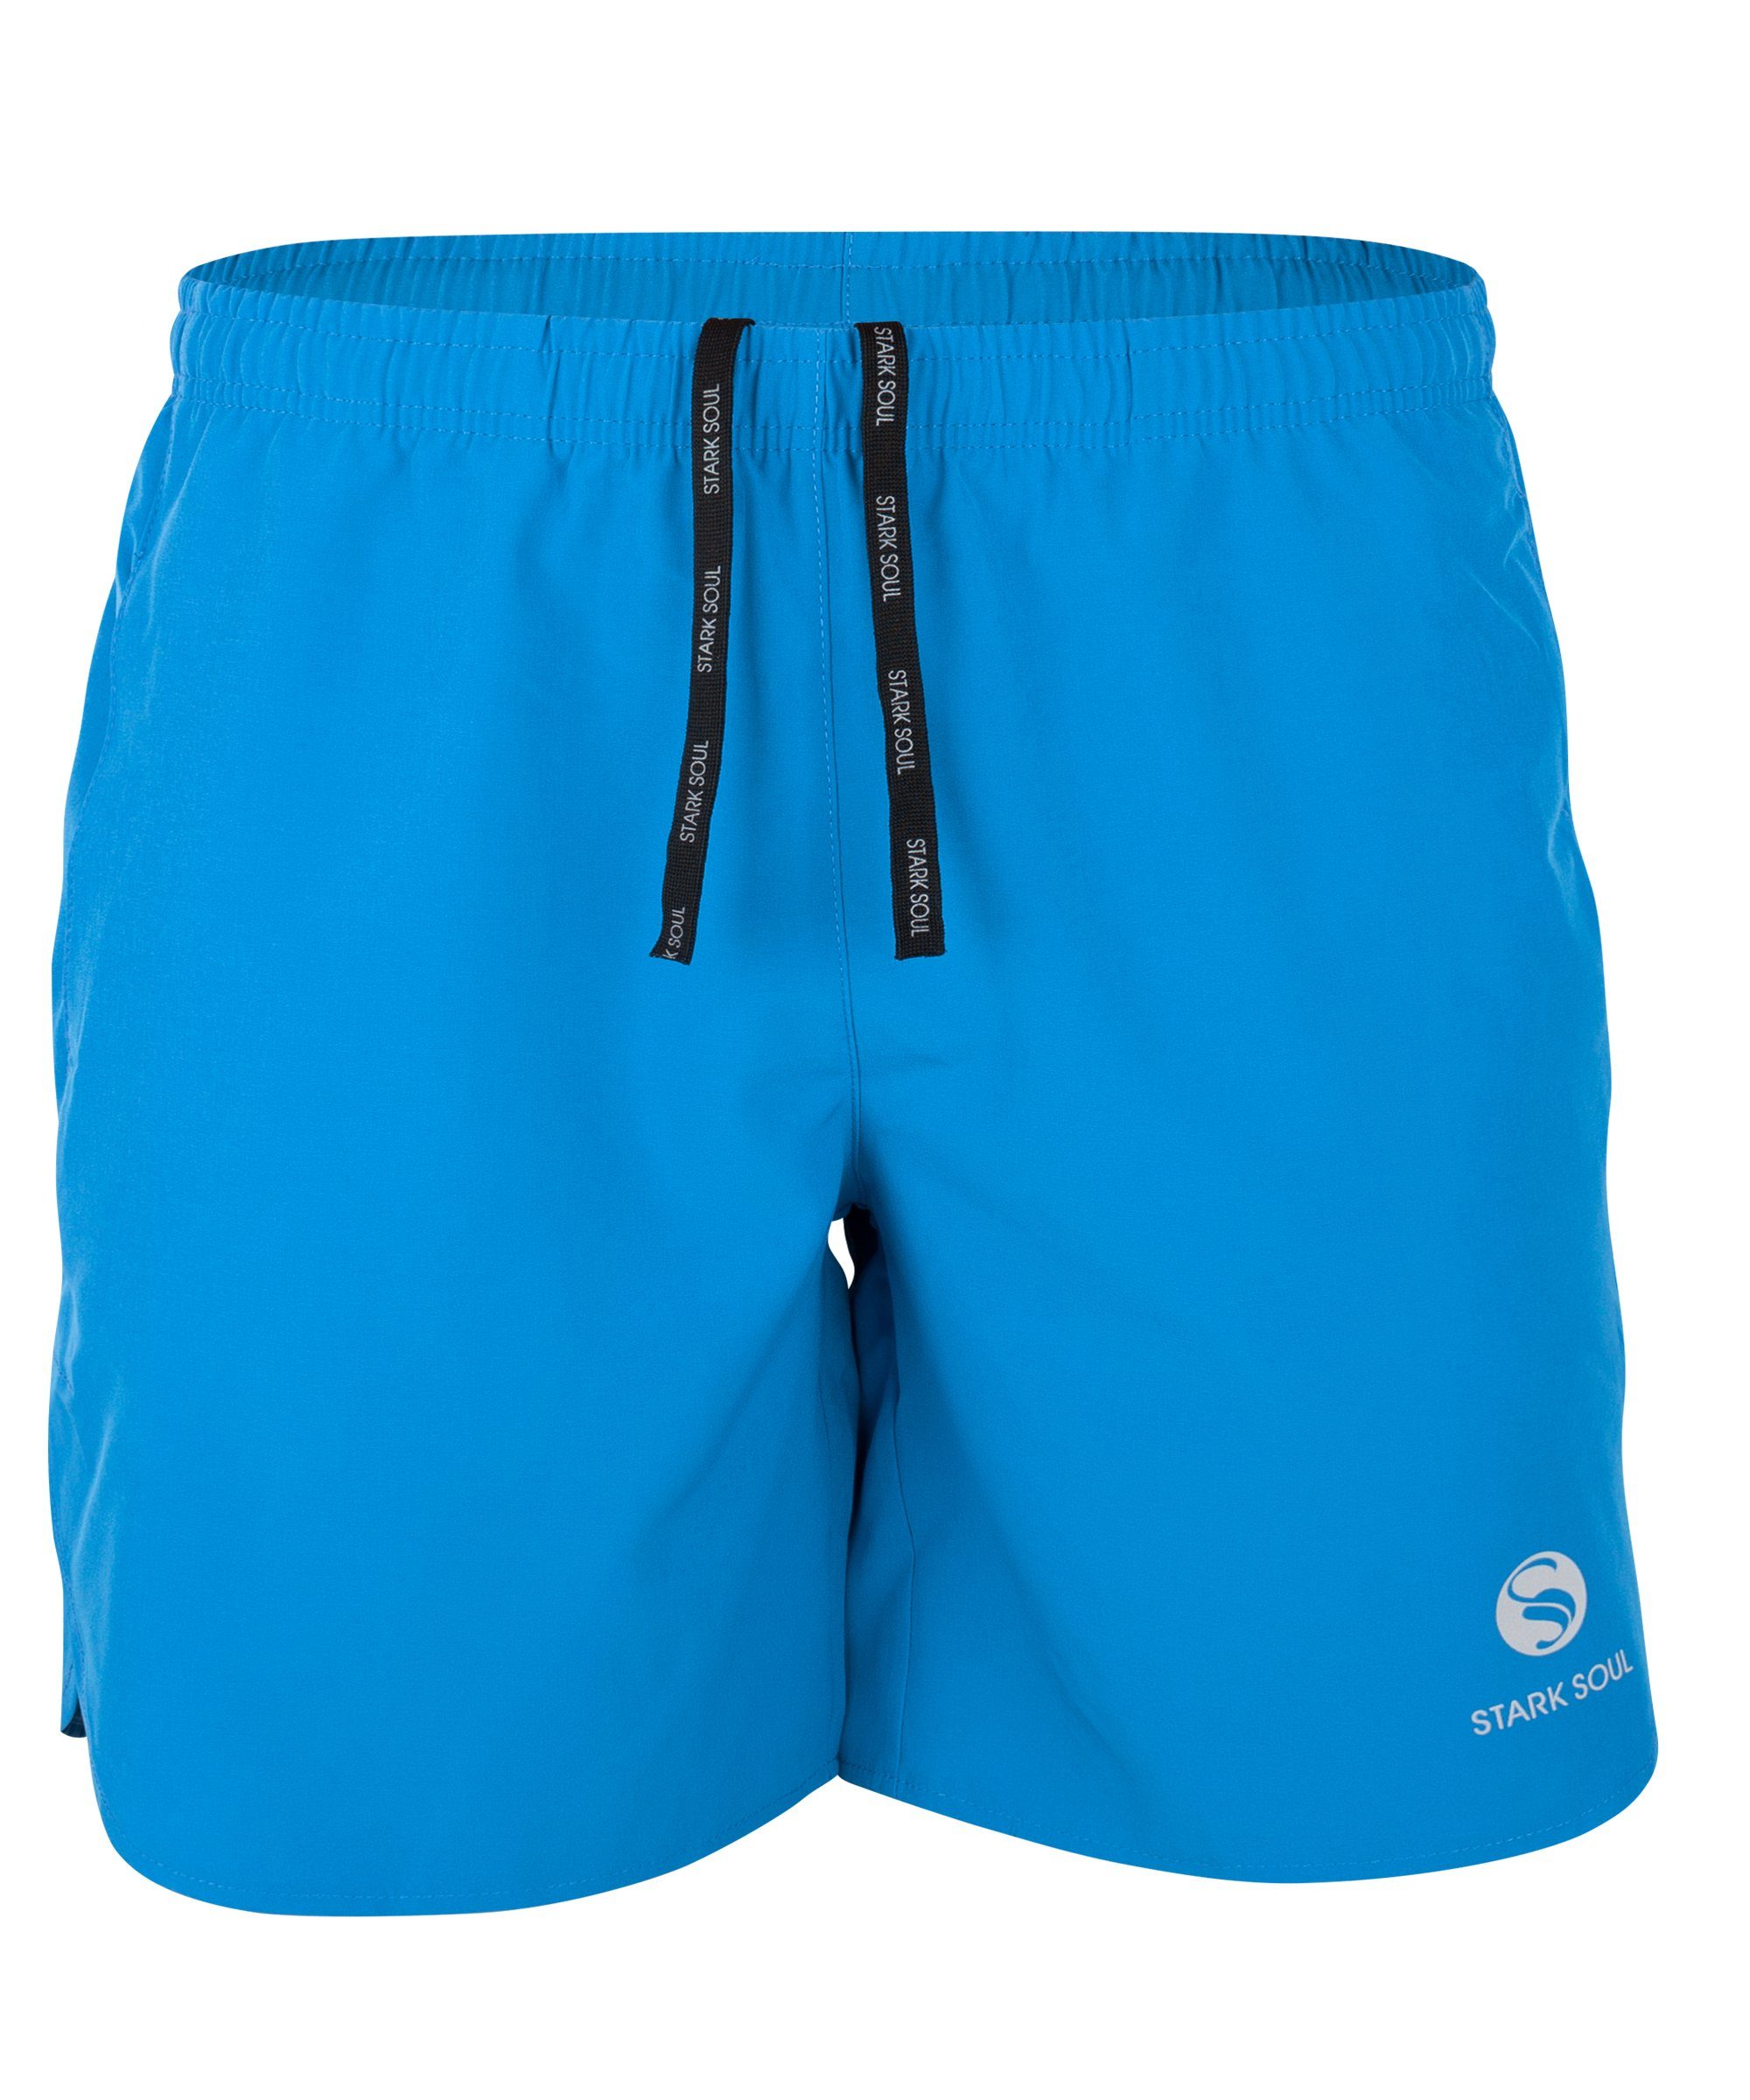 Stark Soul® Trainingsshorts Herren Sport Shorts -Reflect-, Funktionshose, Trainingsshort Spezielles Quick Dry Material Blau